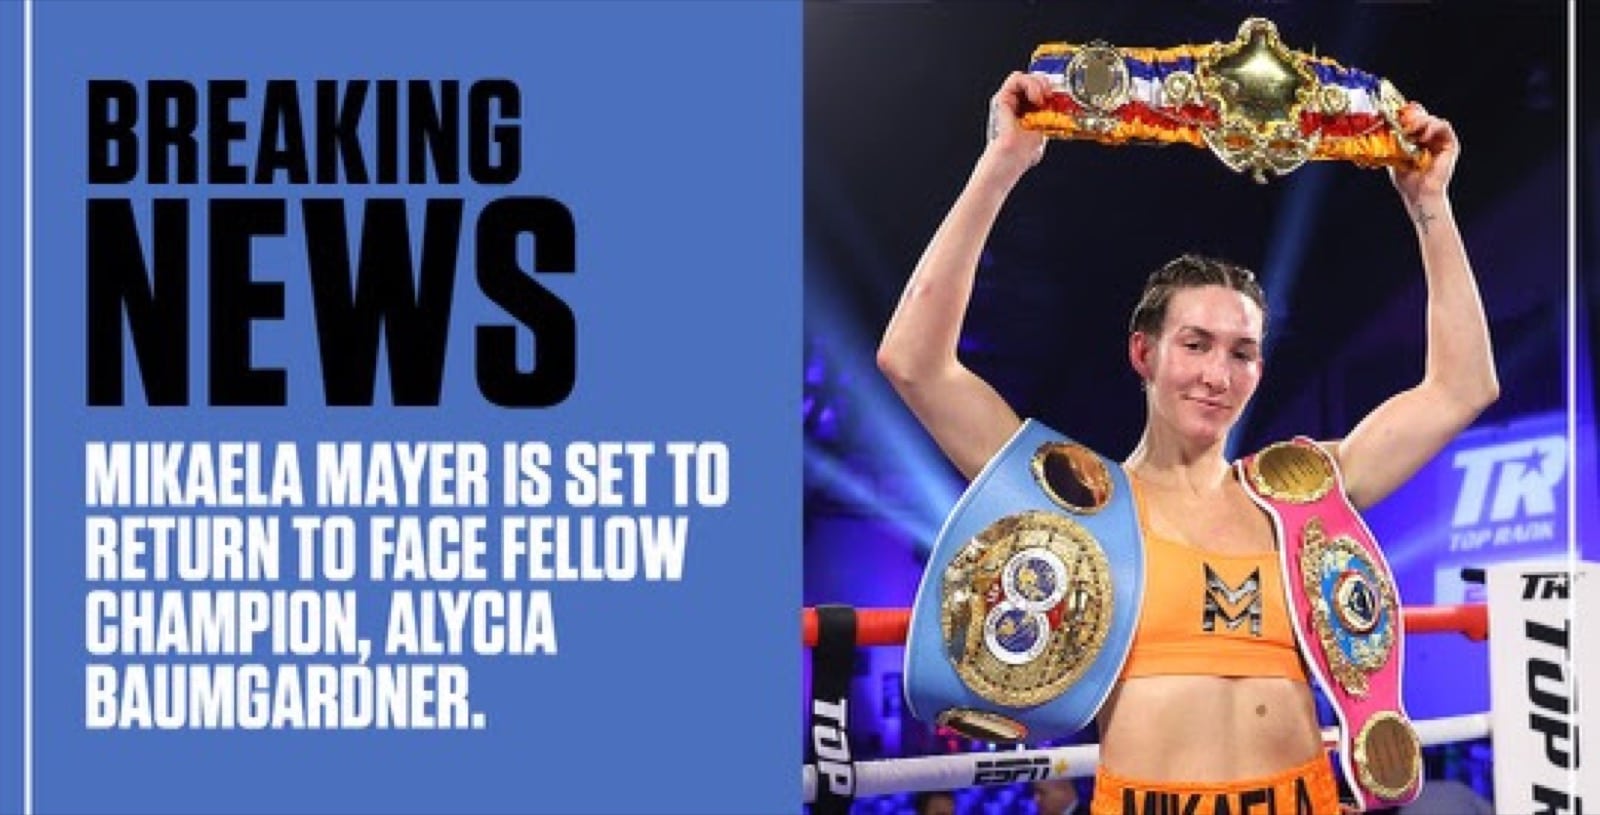 Mikaela Mayer-Alycia Baumgardner “Confirmed” - The Next Women's Super Fight?